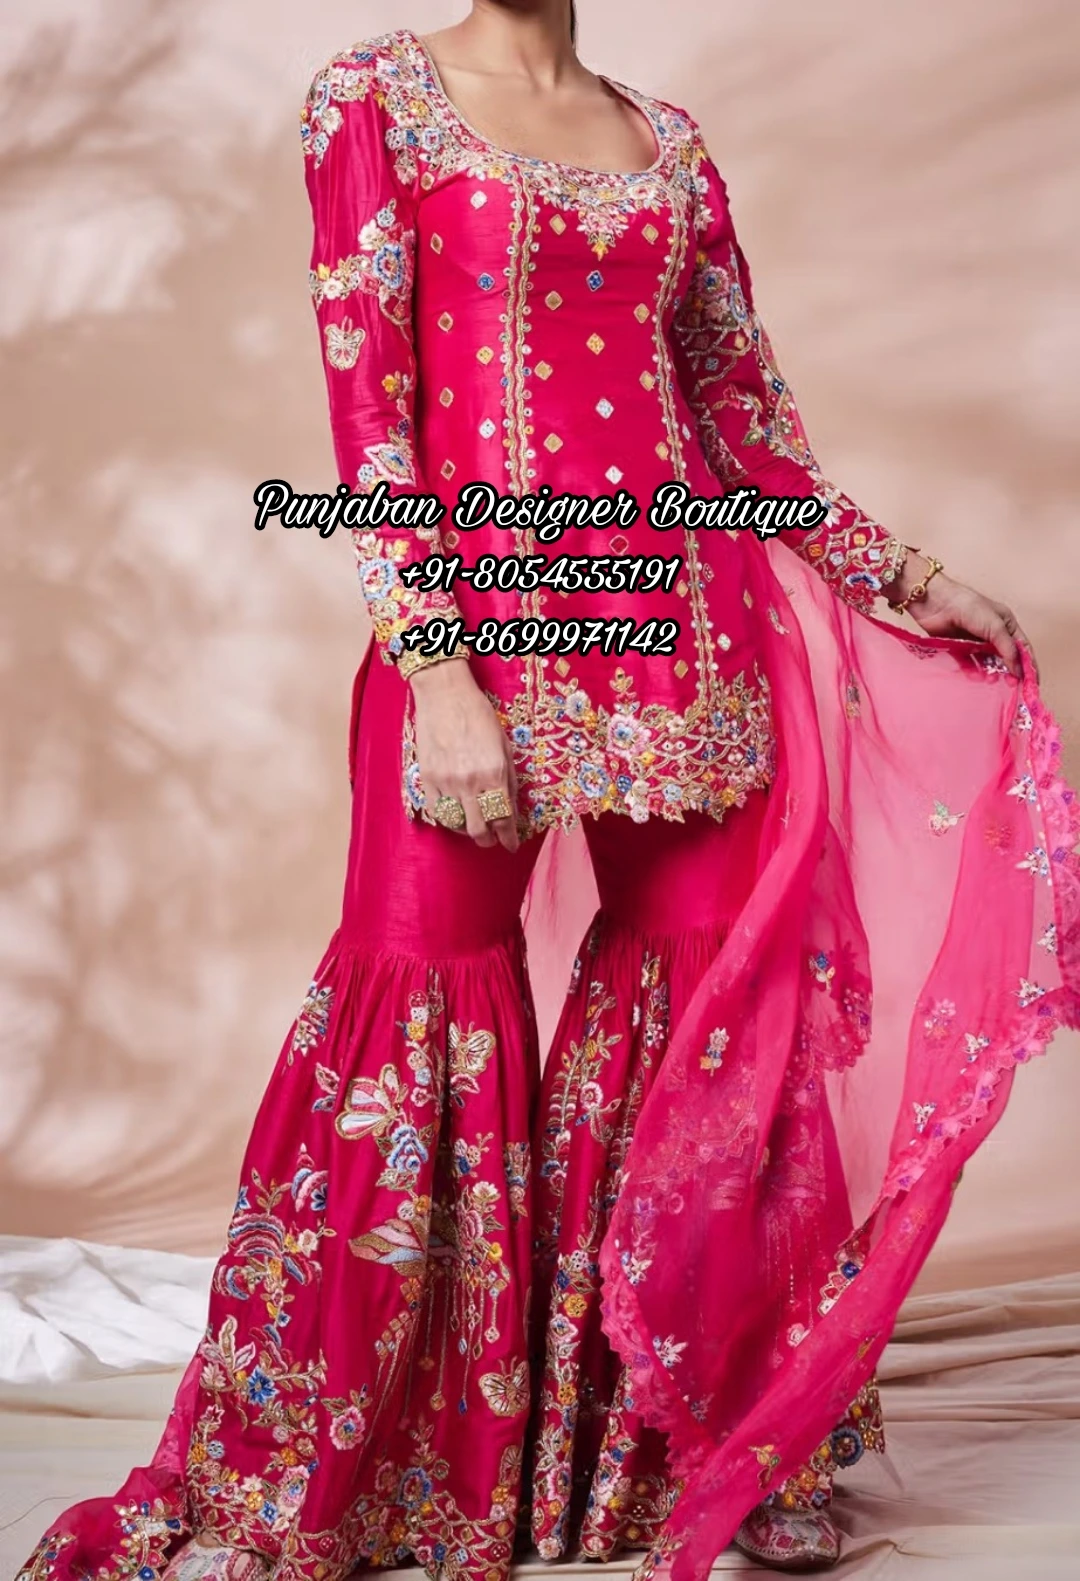 Designer Suit For Women | Punjaban Designer Boutique